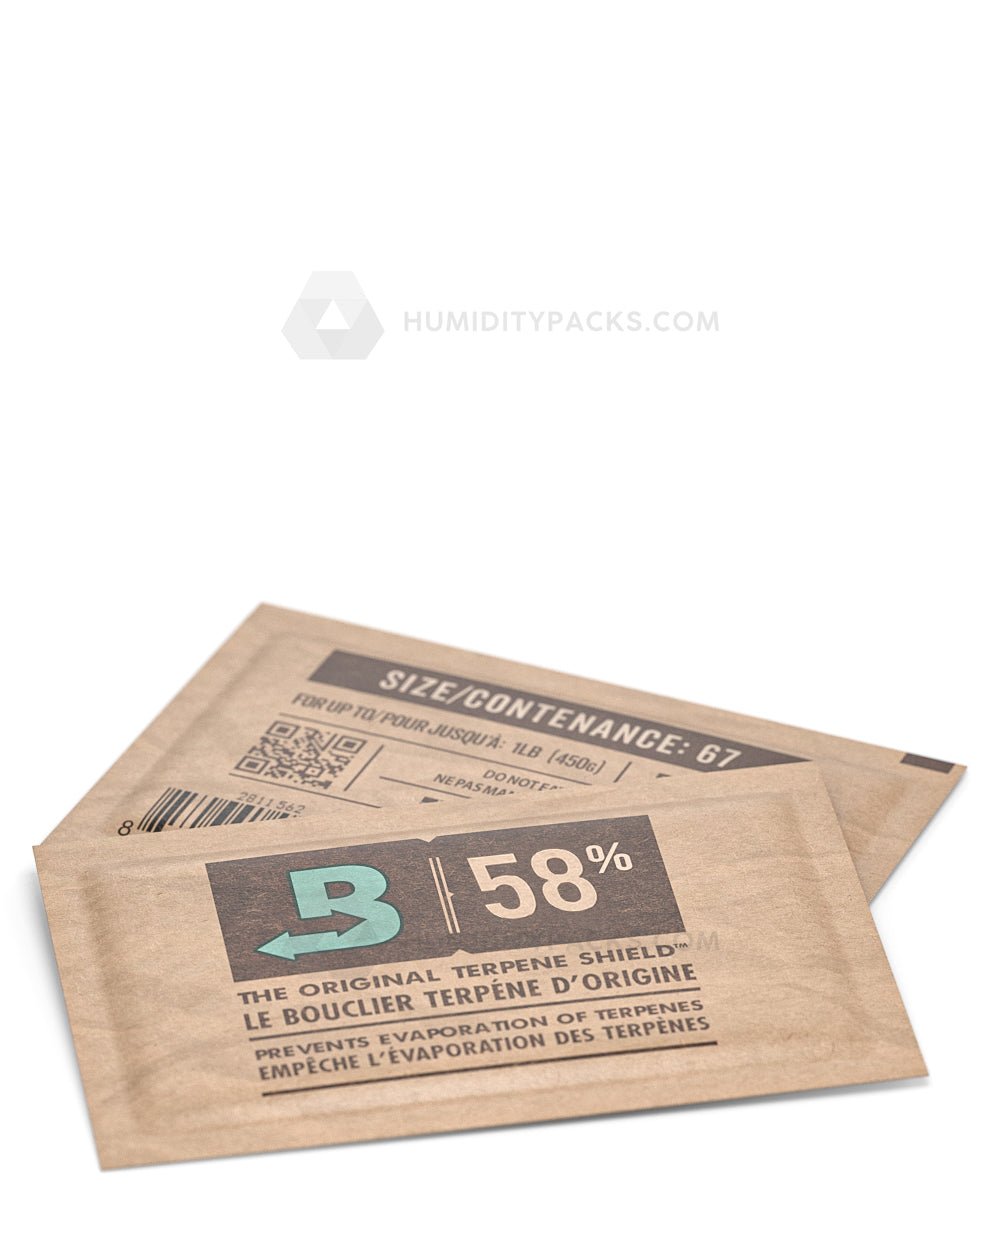 Boveda Humidity Packs 58% (67 Gram) 100-Box Humidity Packs - 5